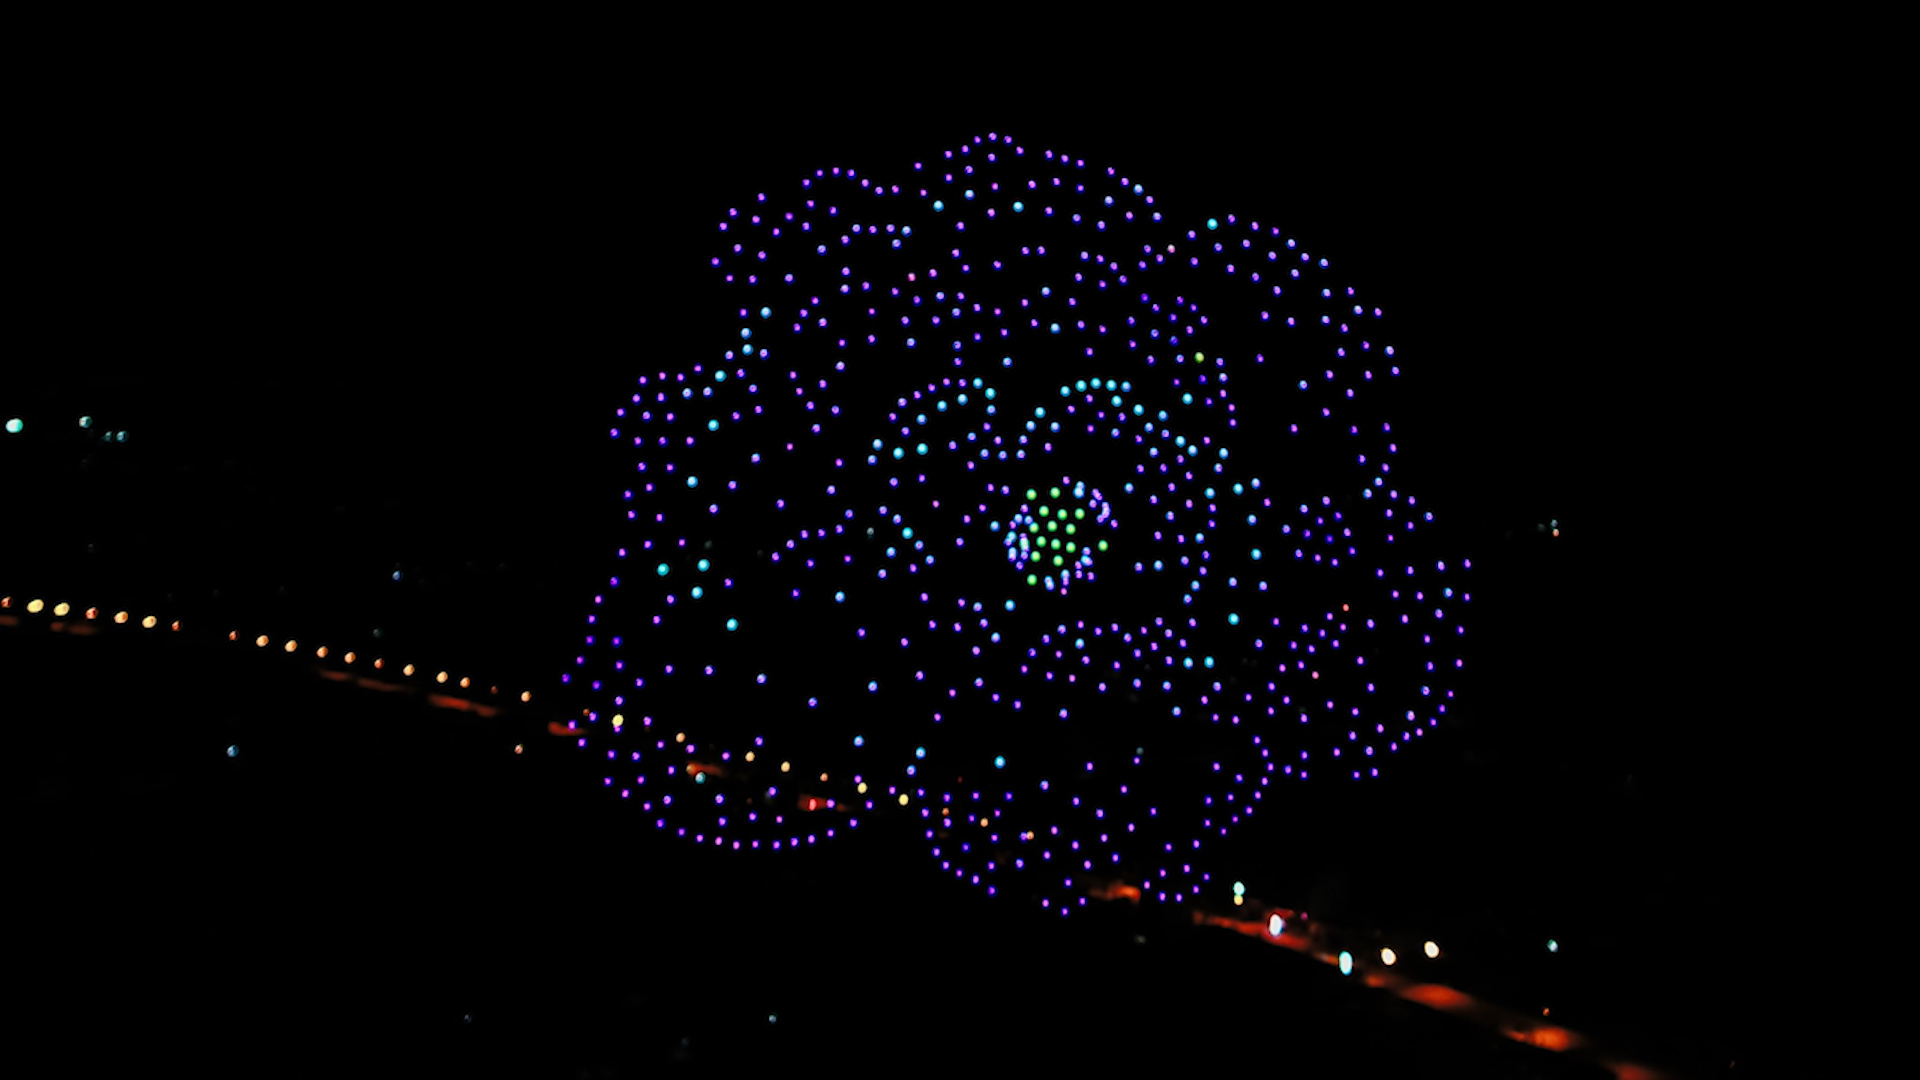 national cultural fantastic drone light show